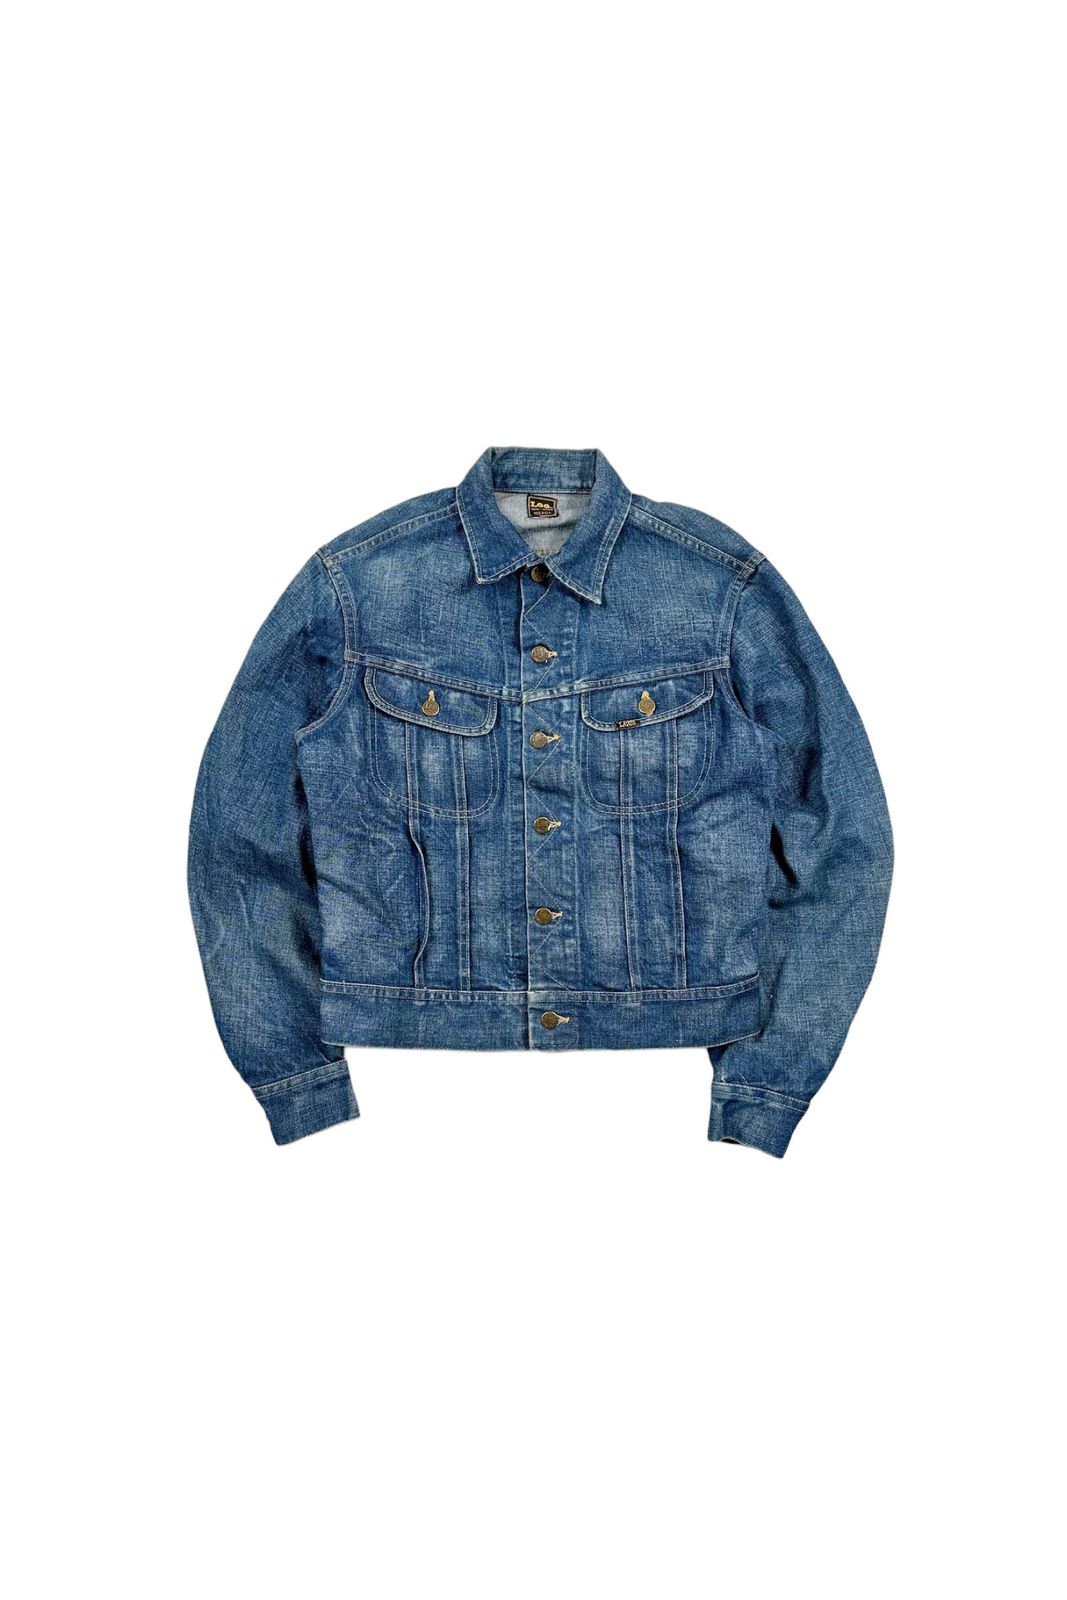 80's Made in USA Lee PATD-153438 denim jacket リー デニム ...